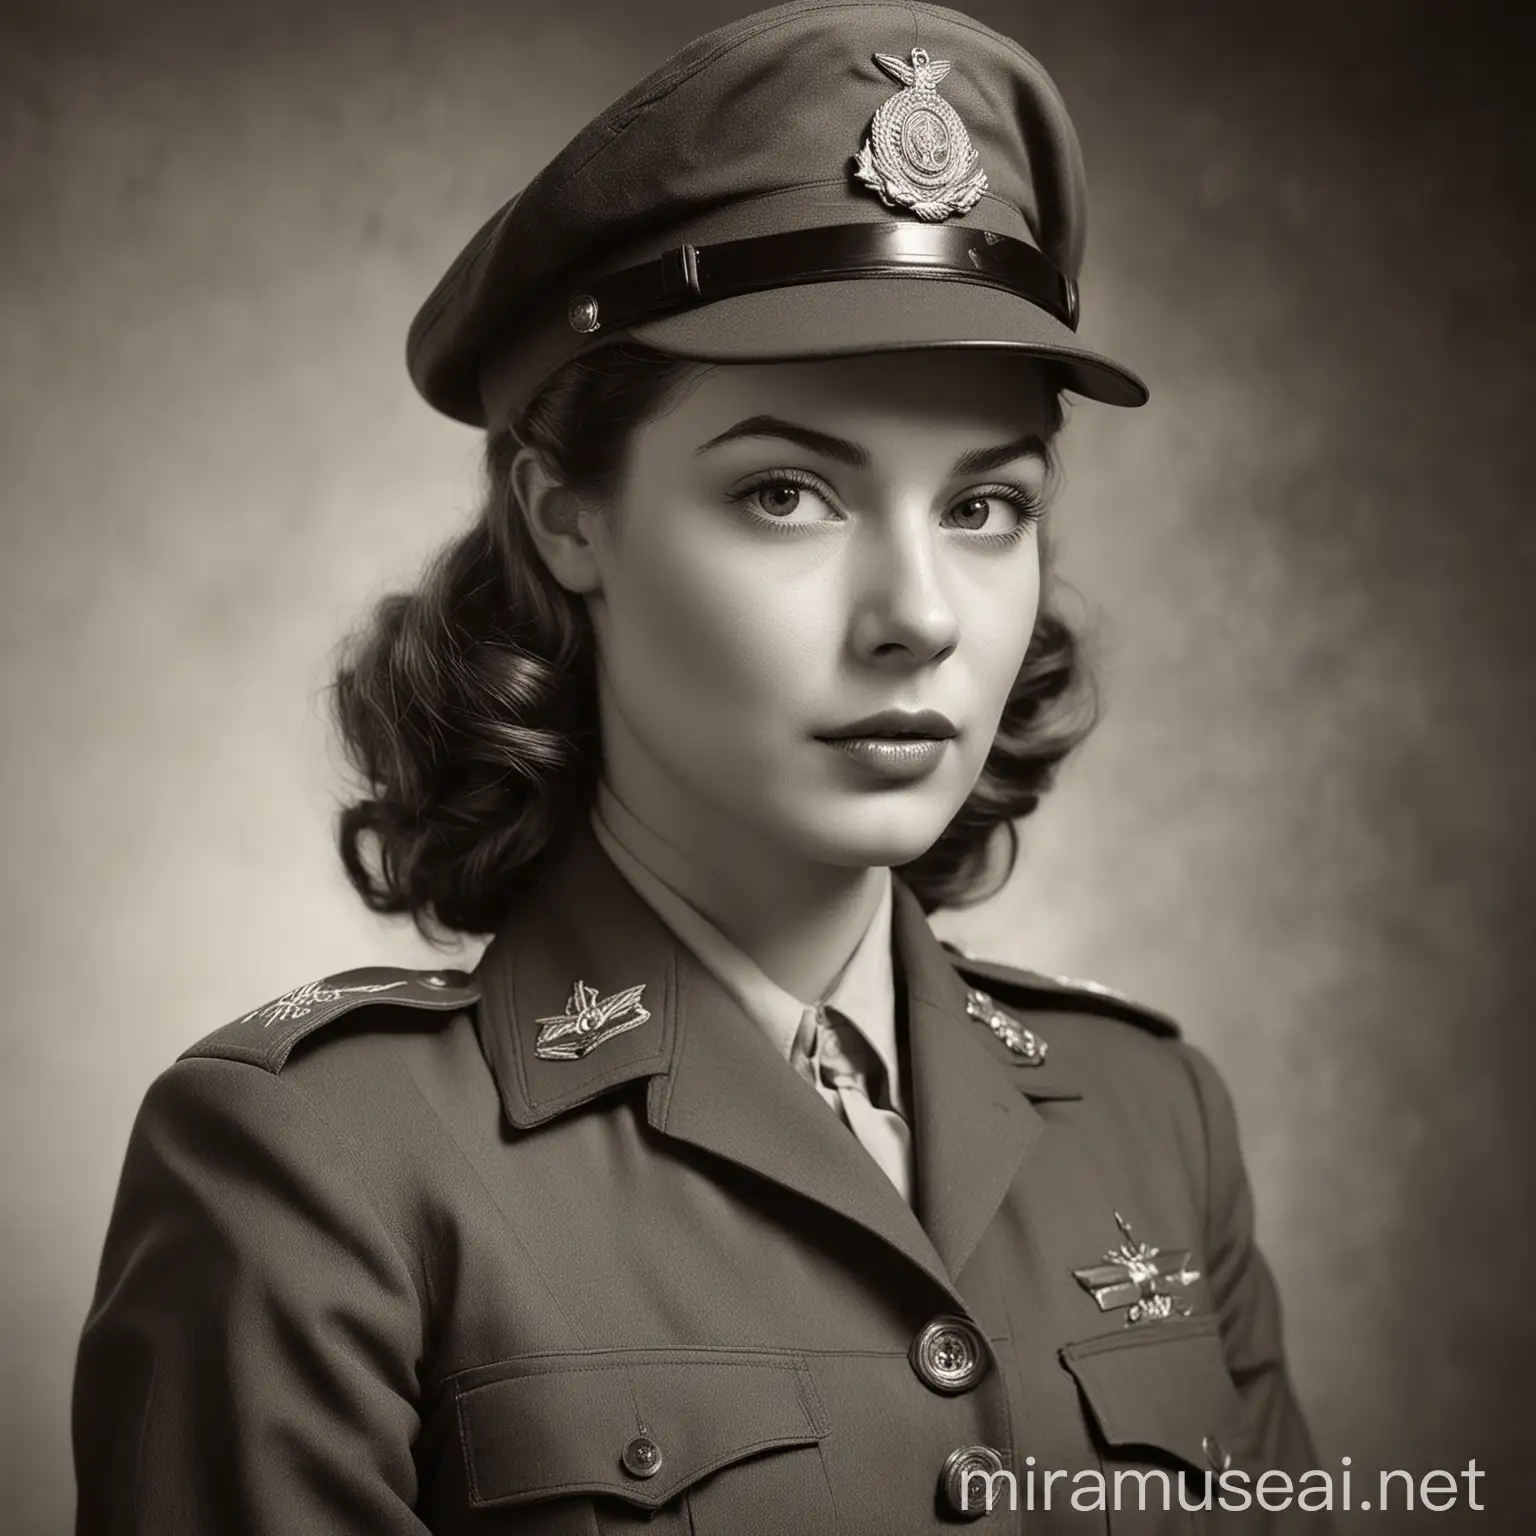 Elegant 1940s Woman in Authentic Military Uniform Vintage Black and White Portrait